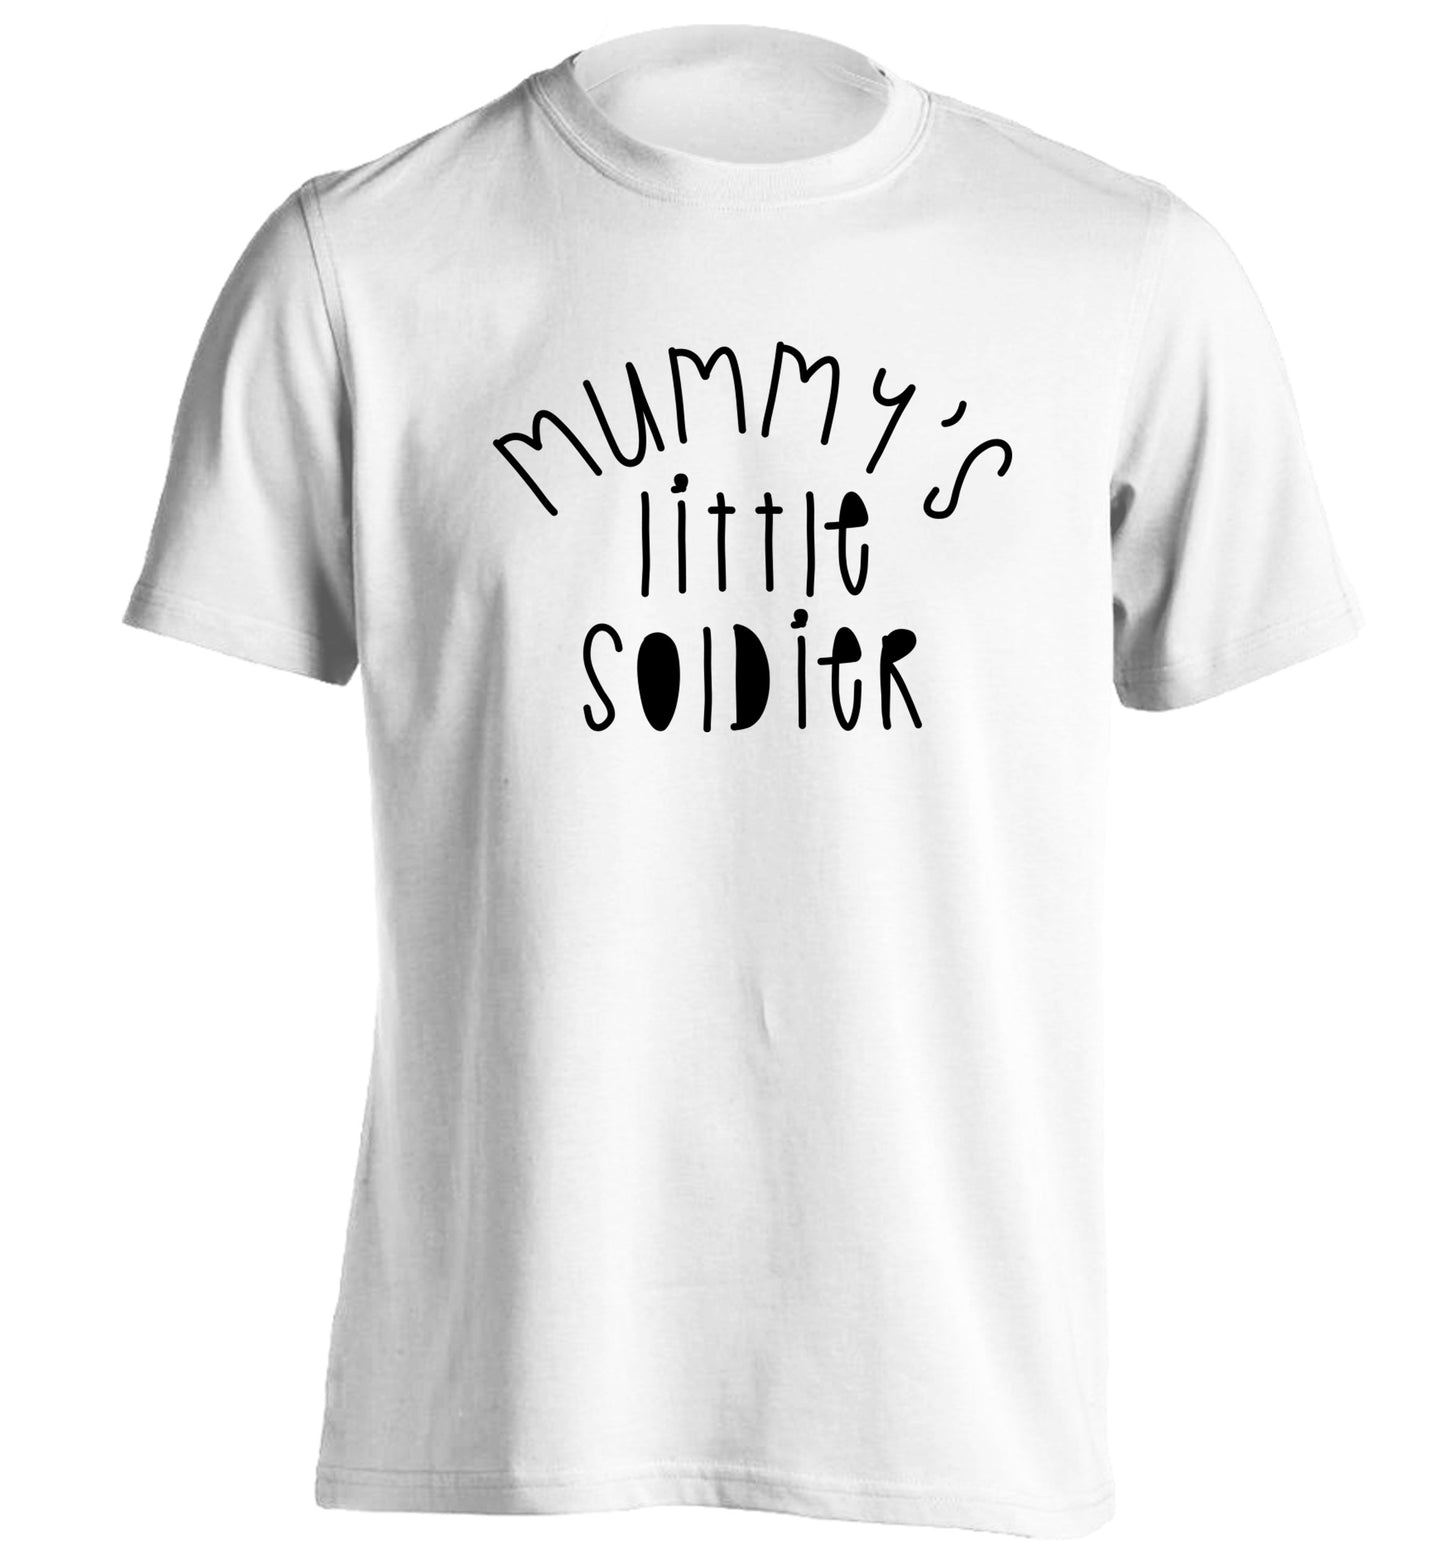 Mummy's little soldier adults unisex white Tshirt 2XL